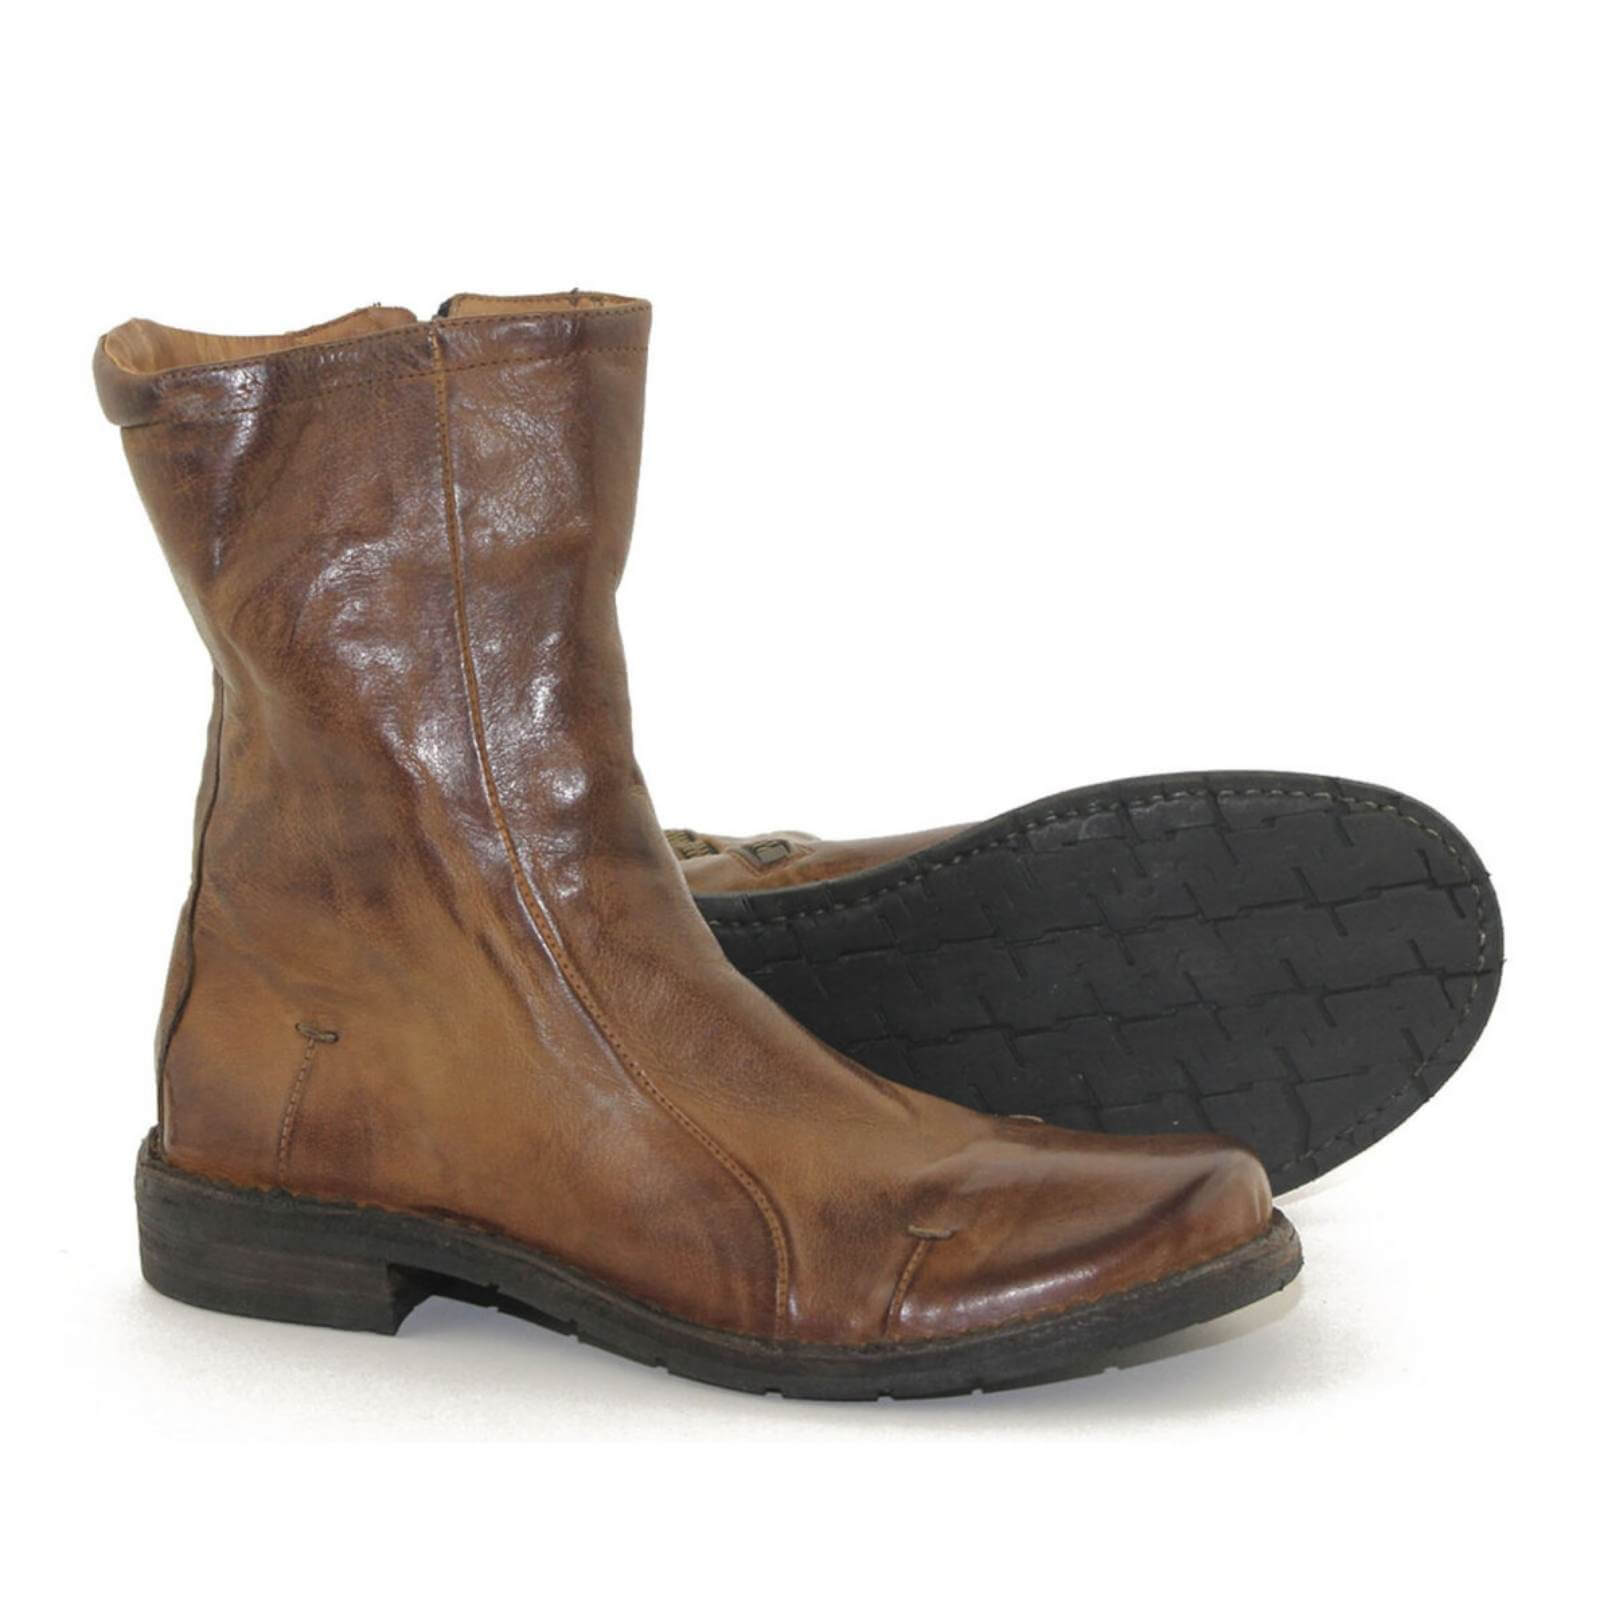 Brune skind støvler i patina look fra Bubetti